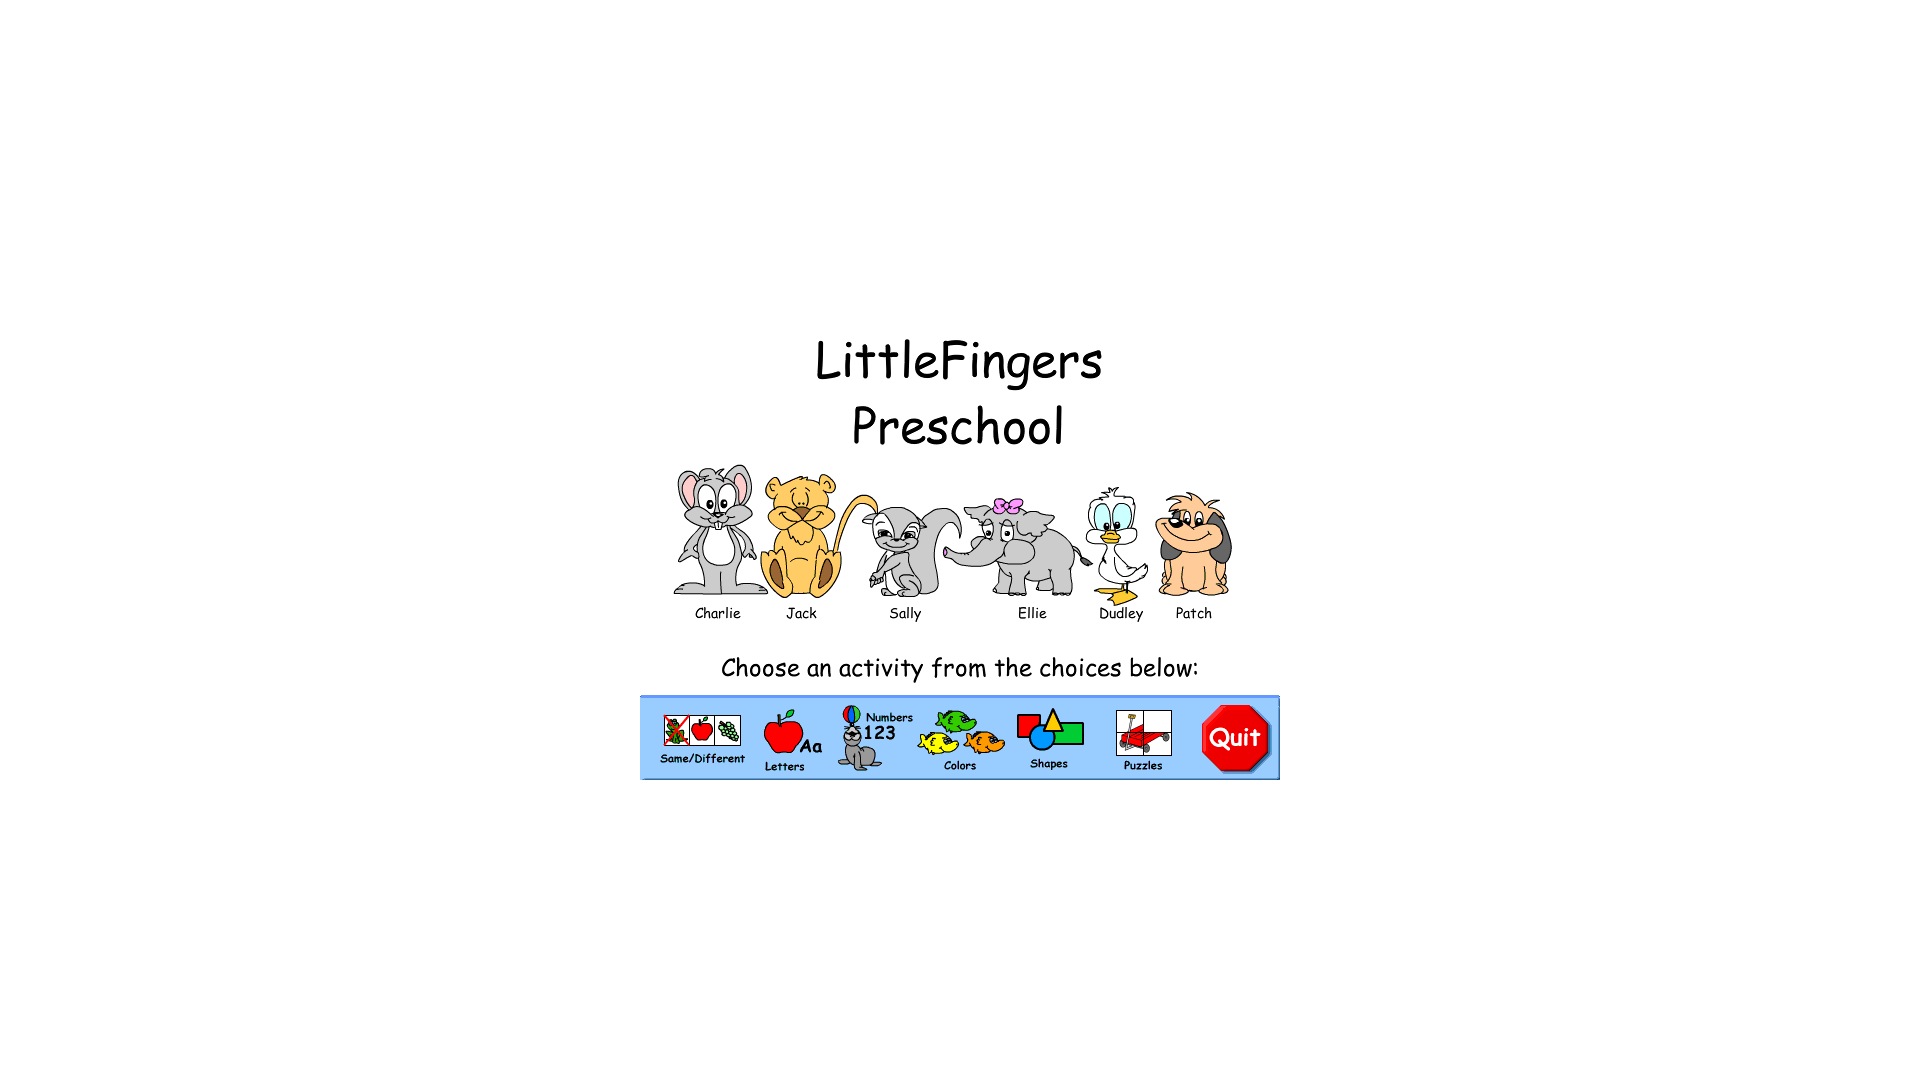 LittleFingers Preschool 1.0 : Main menu